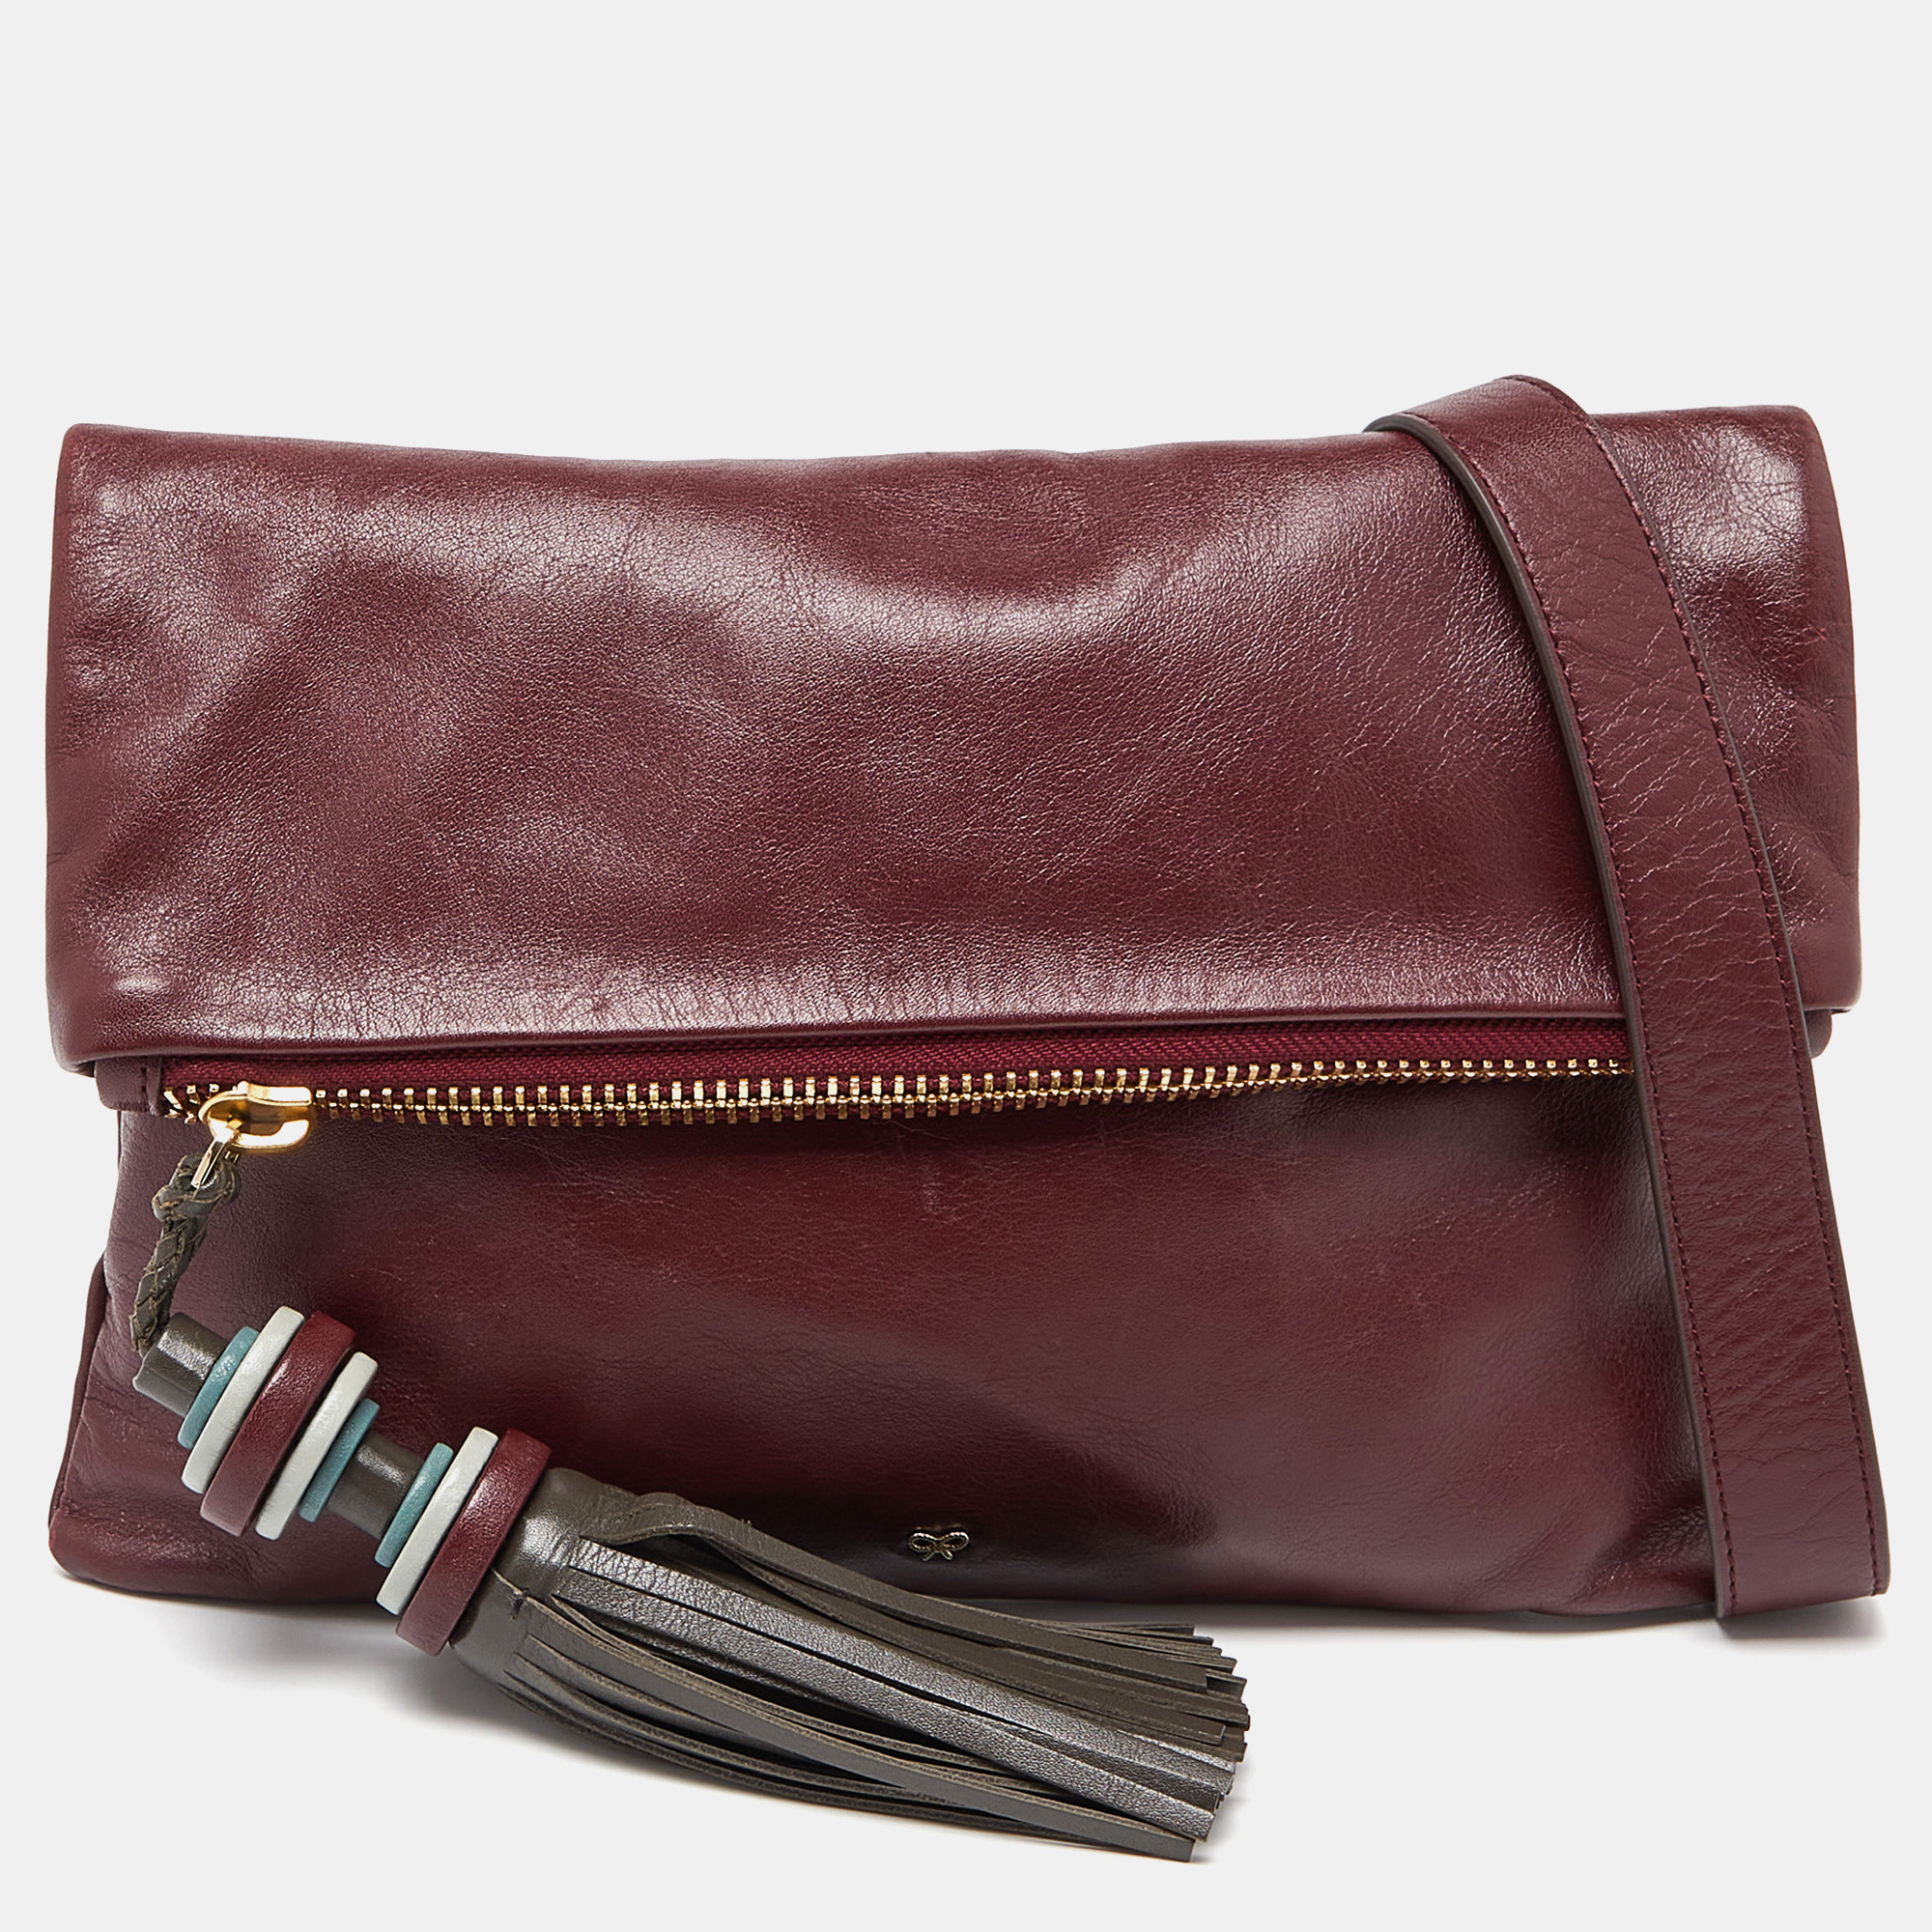 Pre-owned Anya Hindmarch Burgundy Leather Foldover Tassel Crossbody Bag